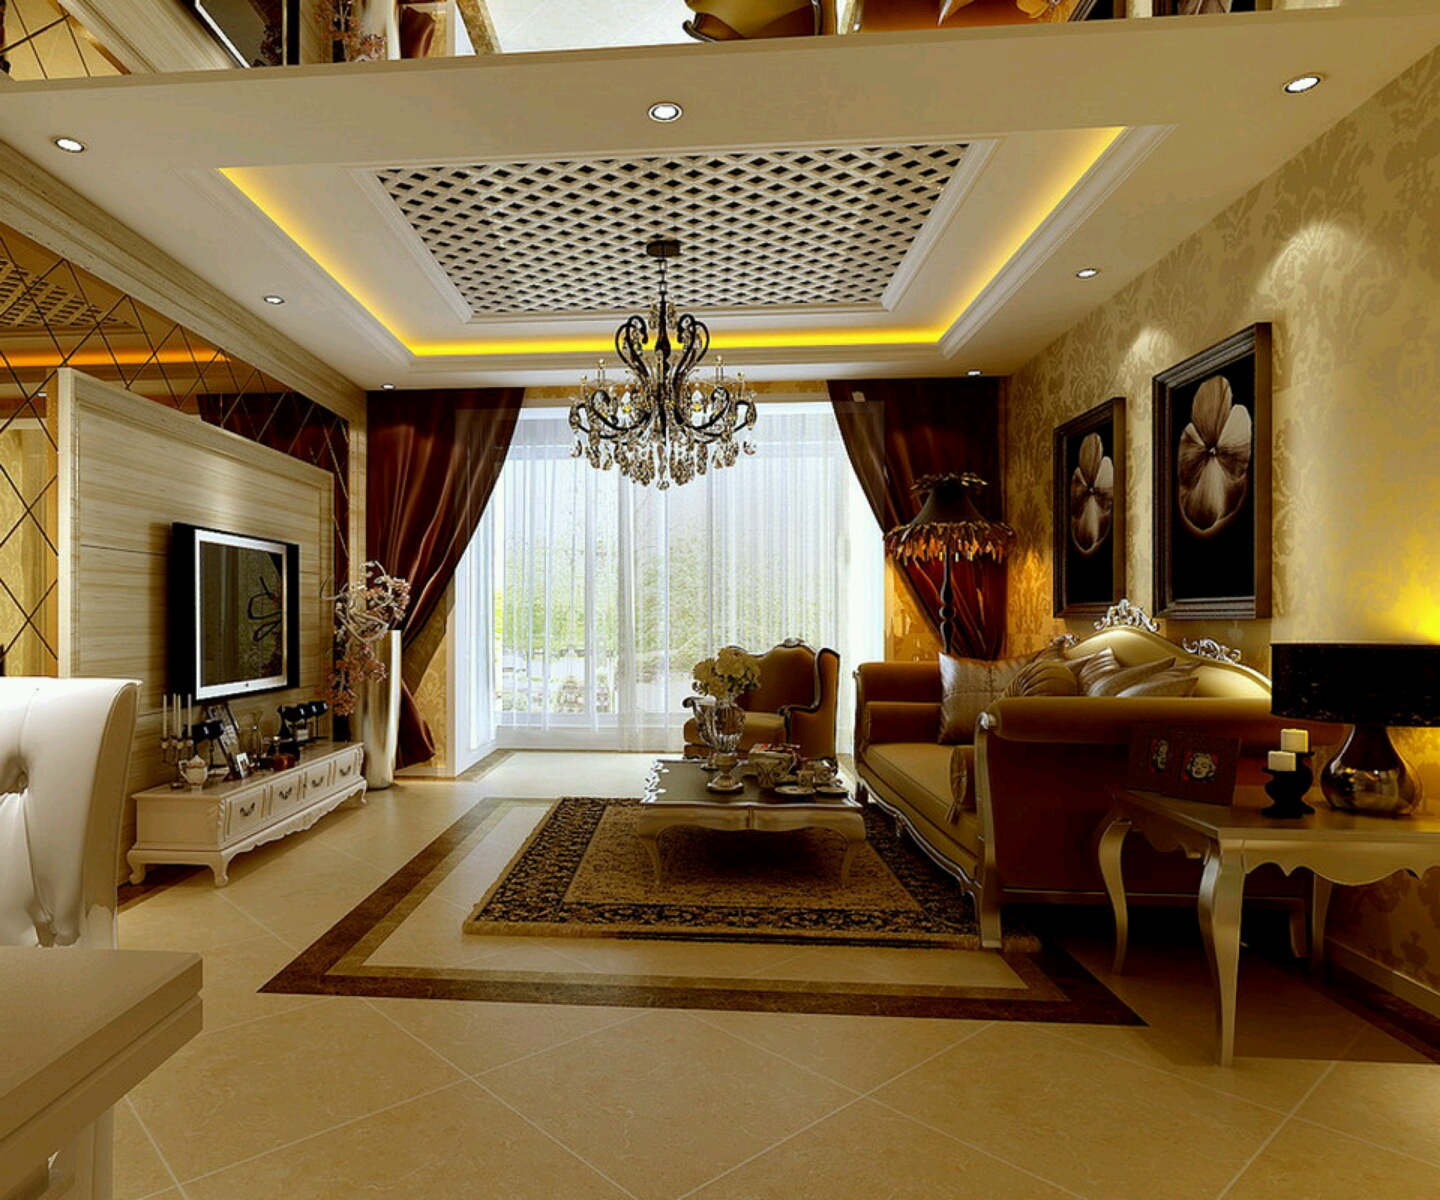 New home designs latest.: Luxury homes interior decoration living room designs ideas.